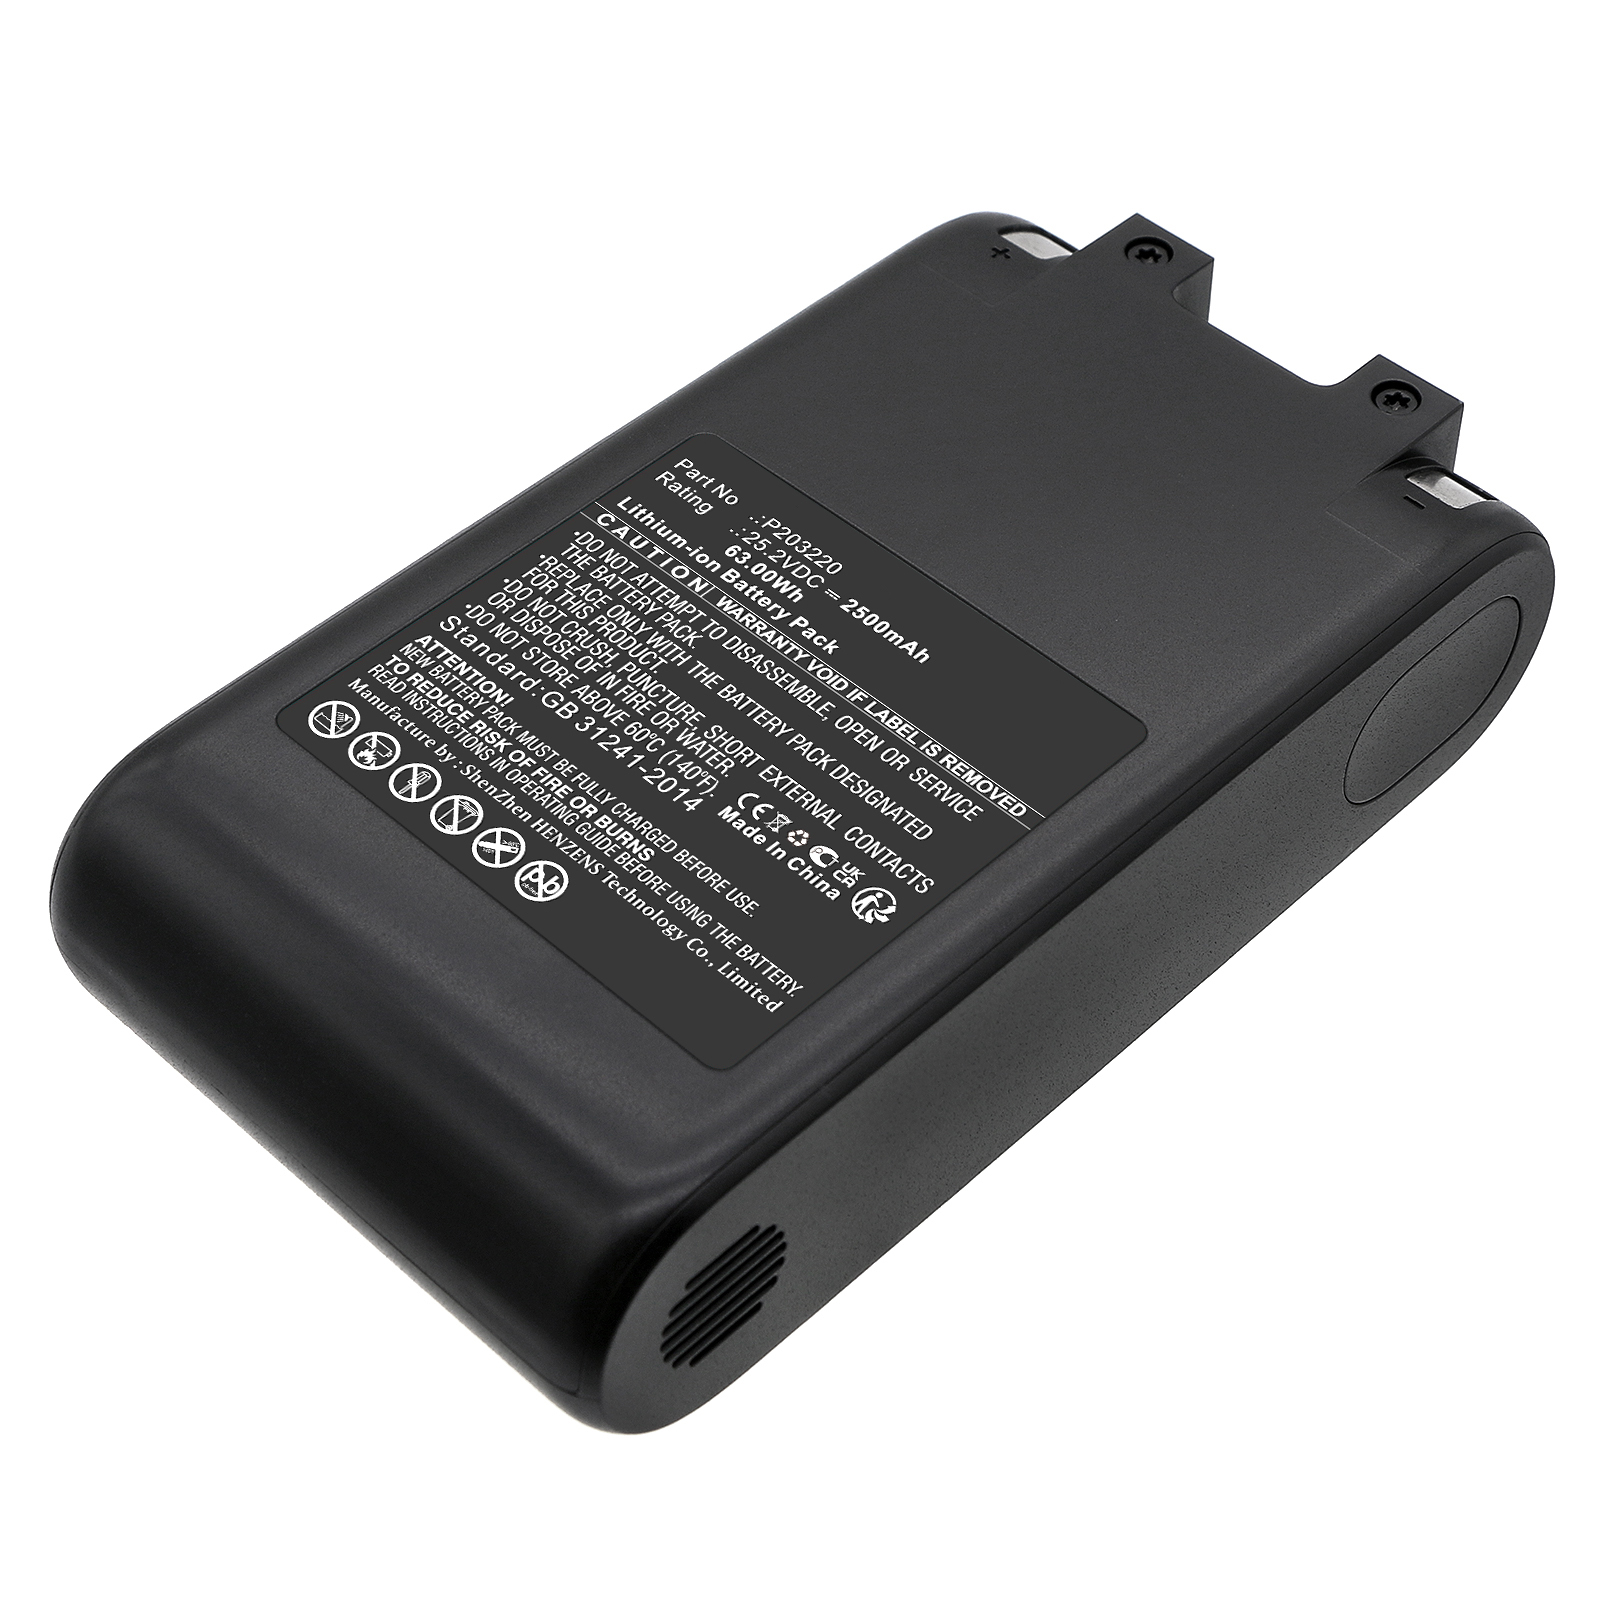 Synergy Digital Vacuum Cleaner Battery, Compatible with Dreame P203220 Vacuum Cleaner Battery (Li-ion, 25.2V, 2500mAh)